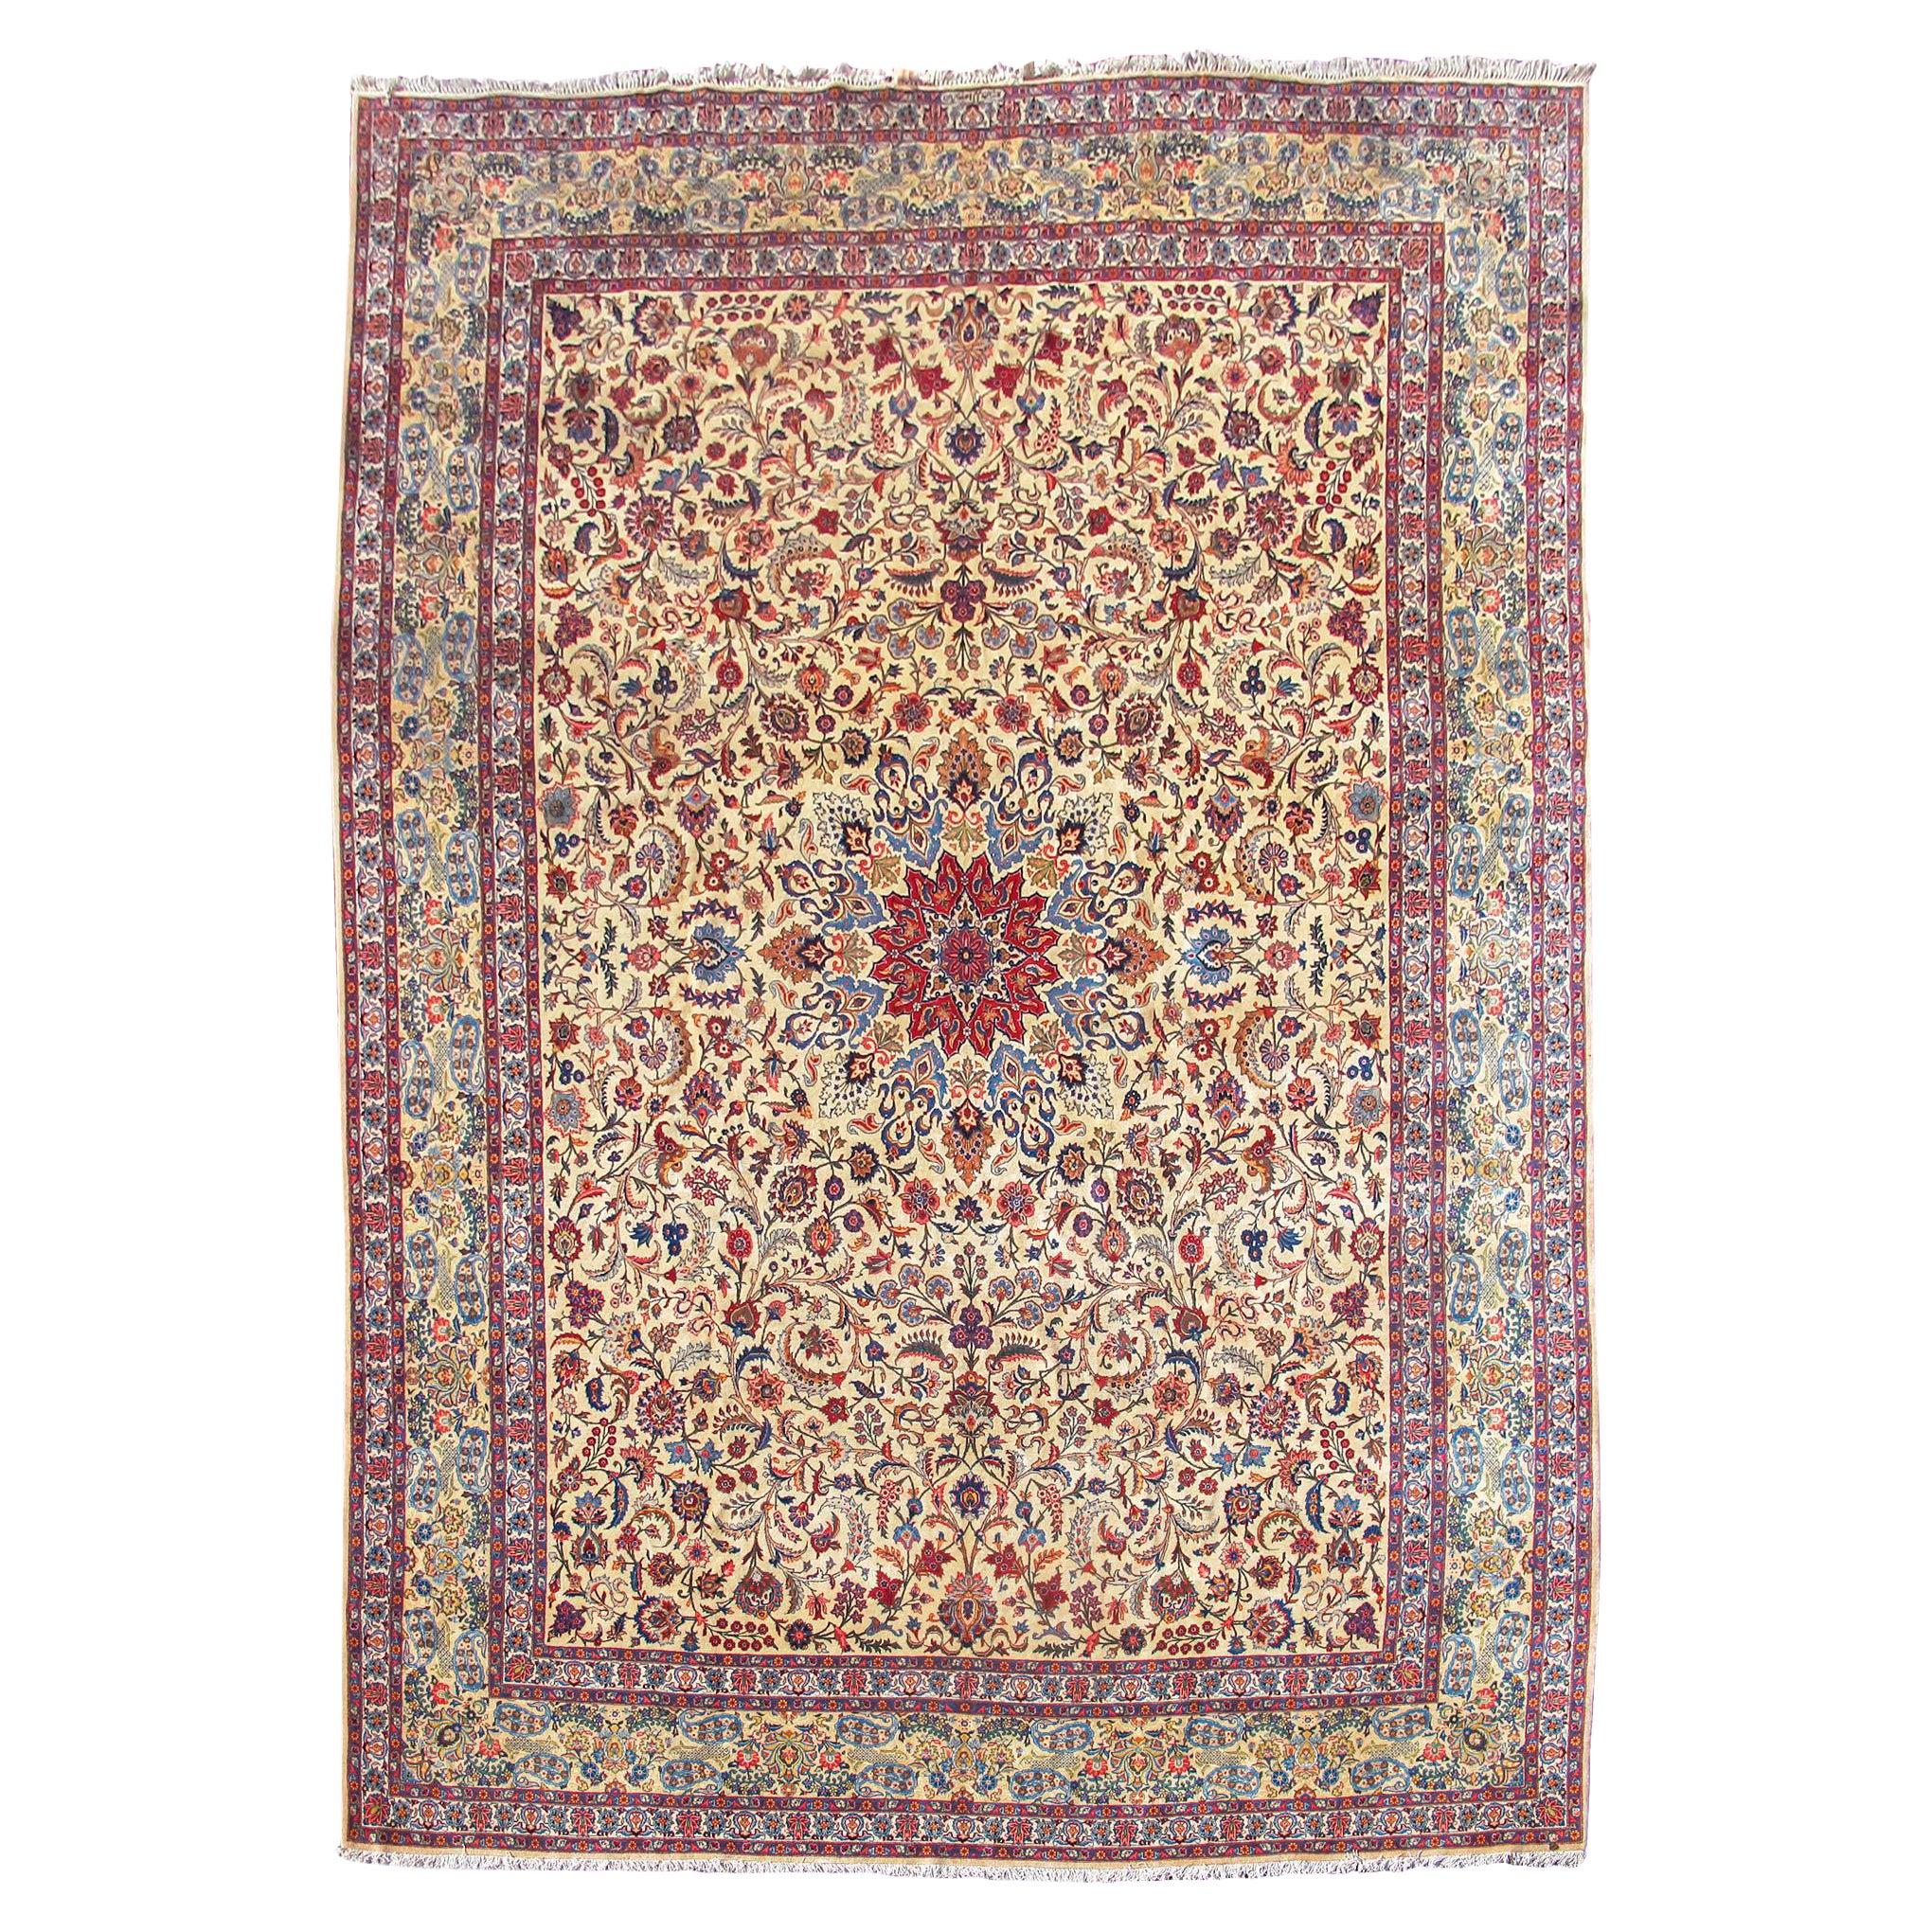 Antique Large Persian Kashan Carpet, Mid-20th Century